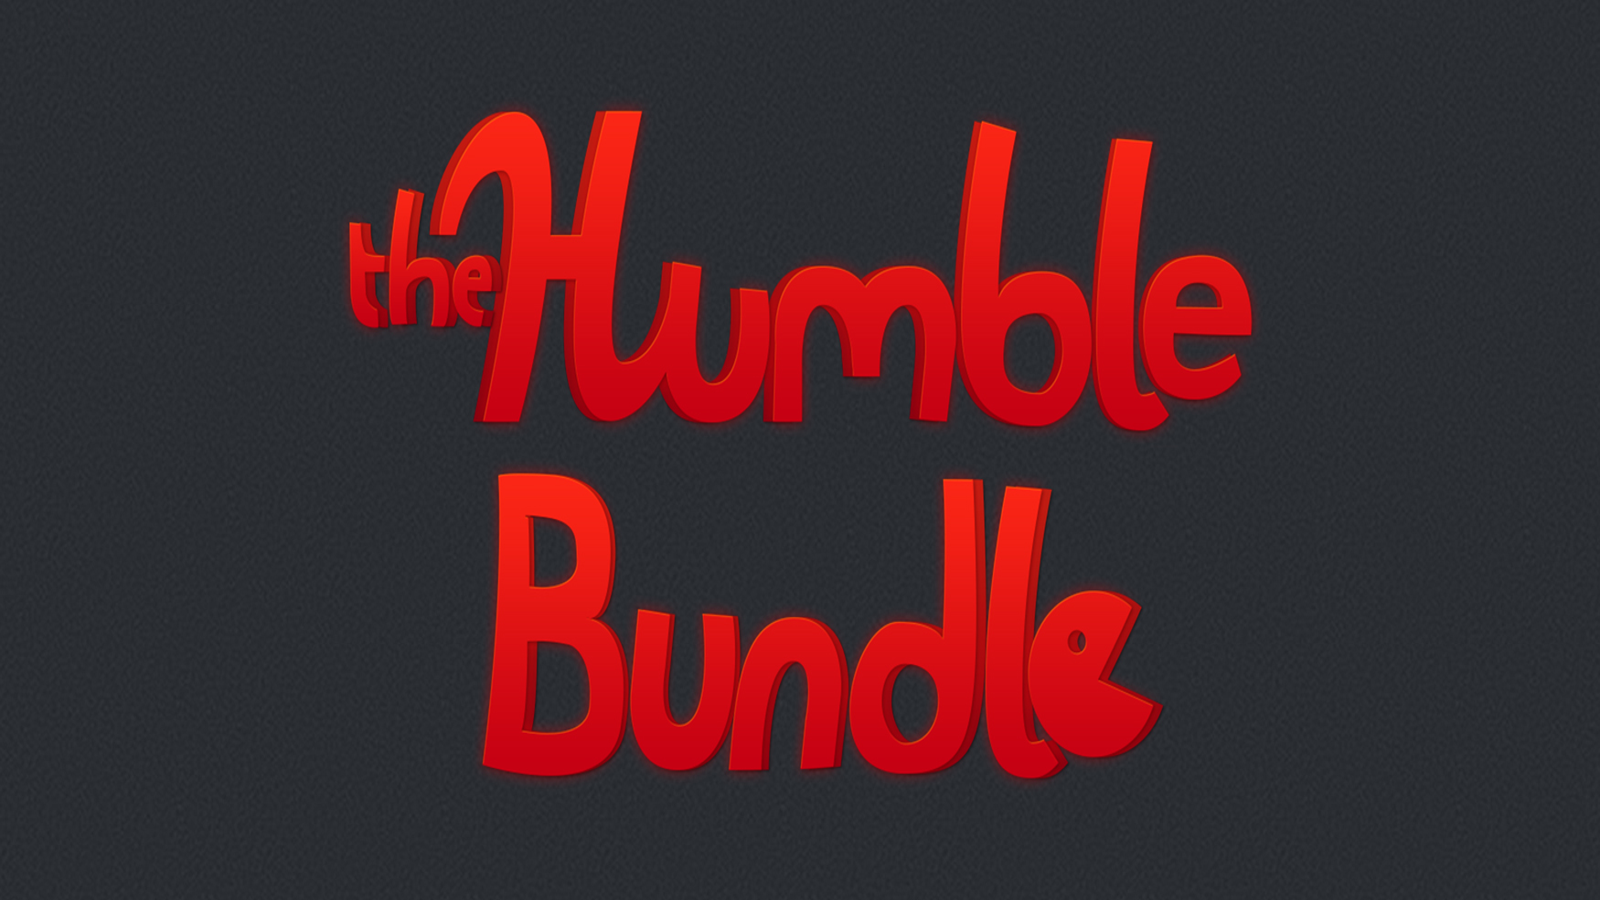 Humble Bundle has raised over $50 million